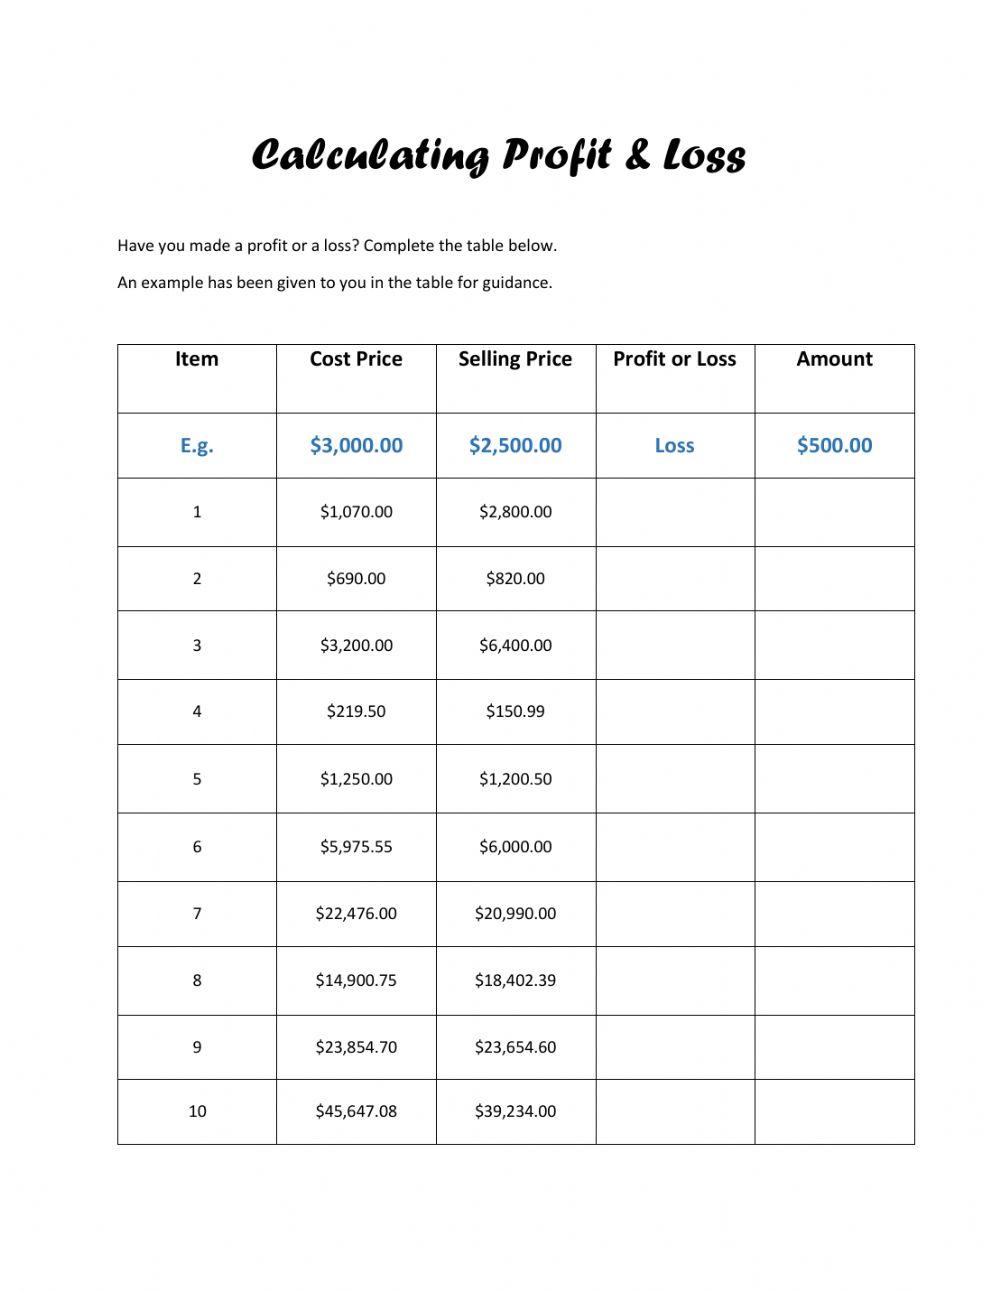 Calculating Profit or Loss